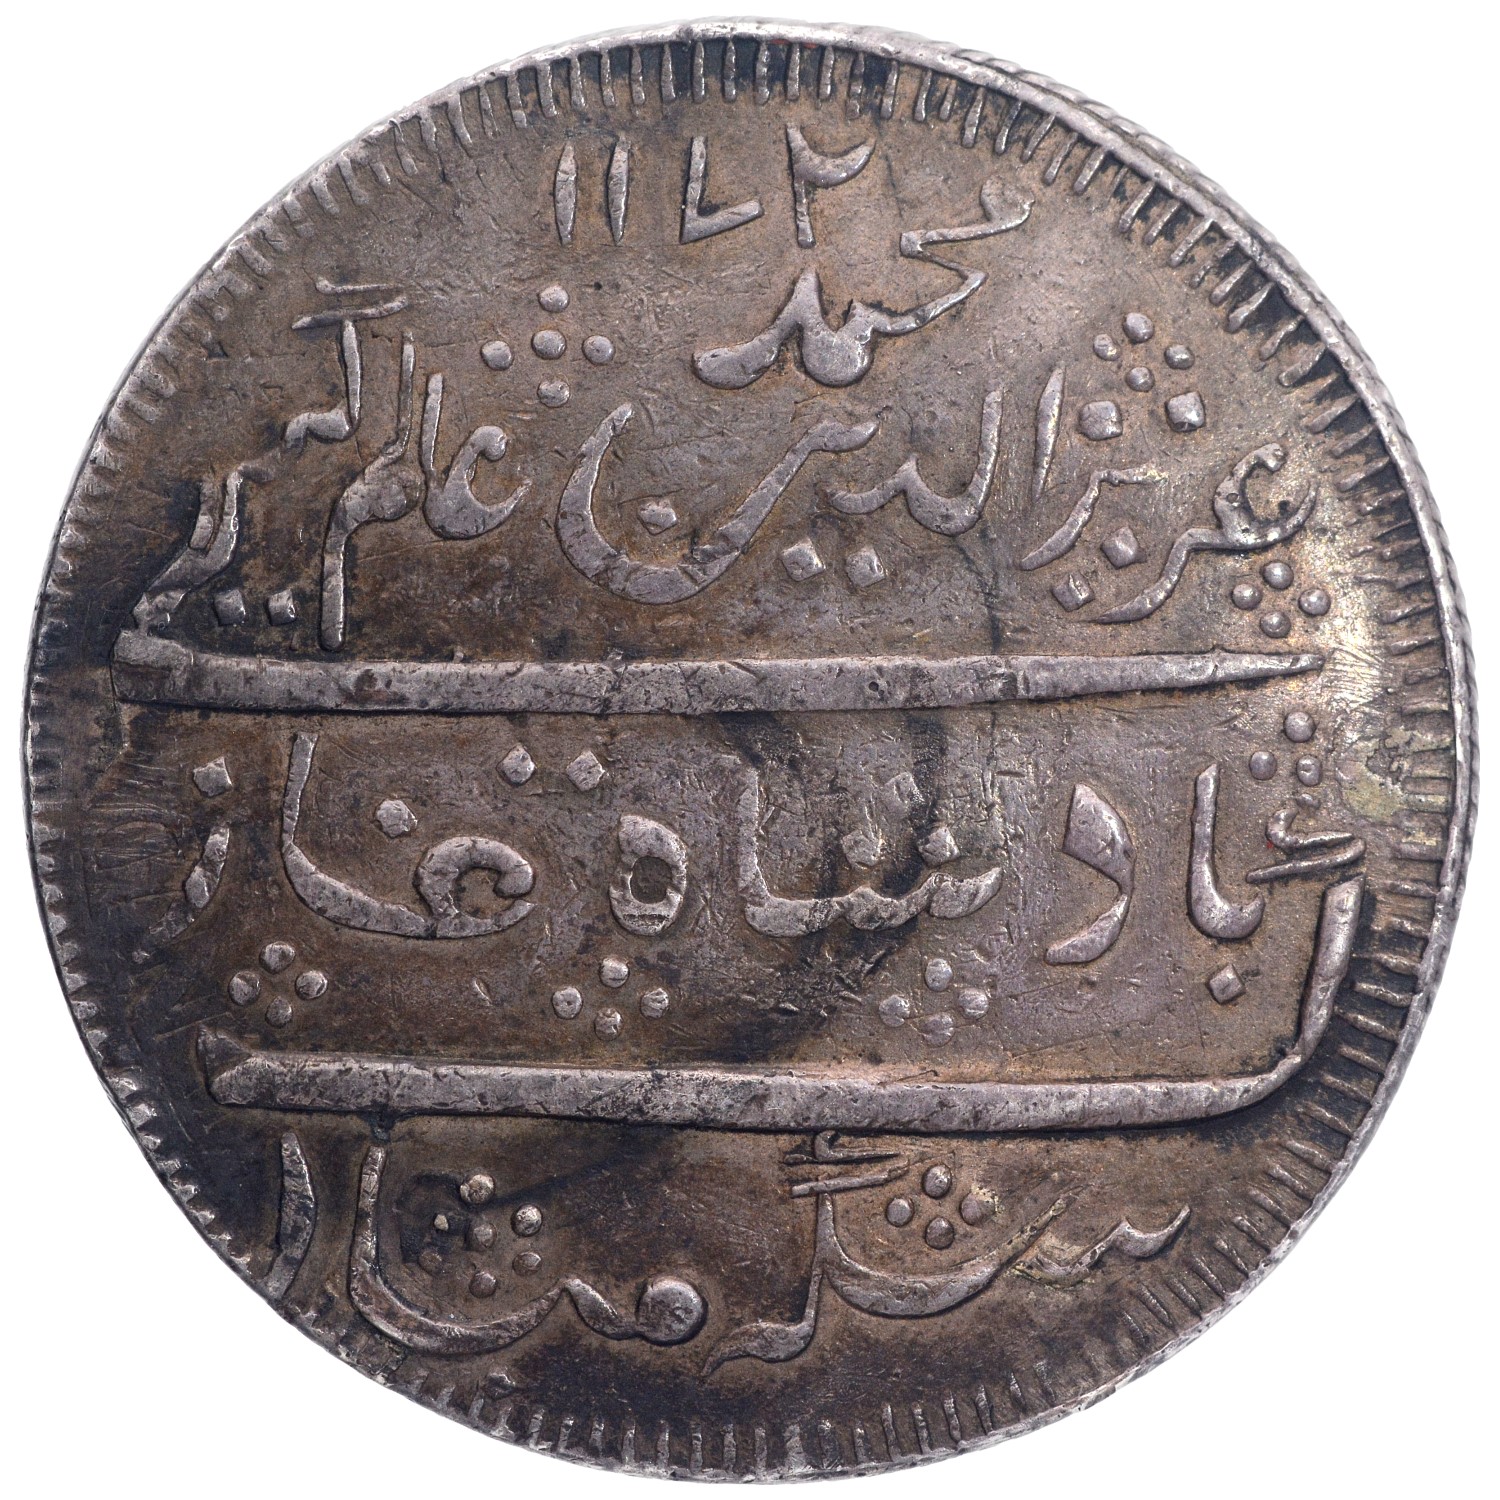 Madras Presidency, Arcot (Madras) Mint, Silver 2 Rupees, AH 1172/6 RY, Rosette type, Edge: Oblique